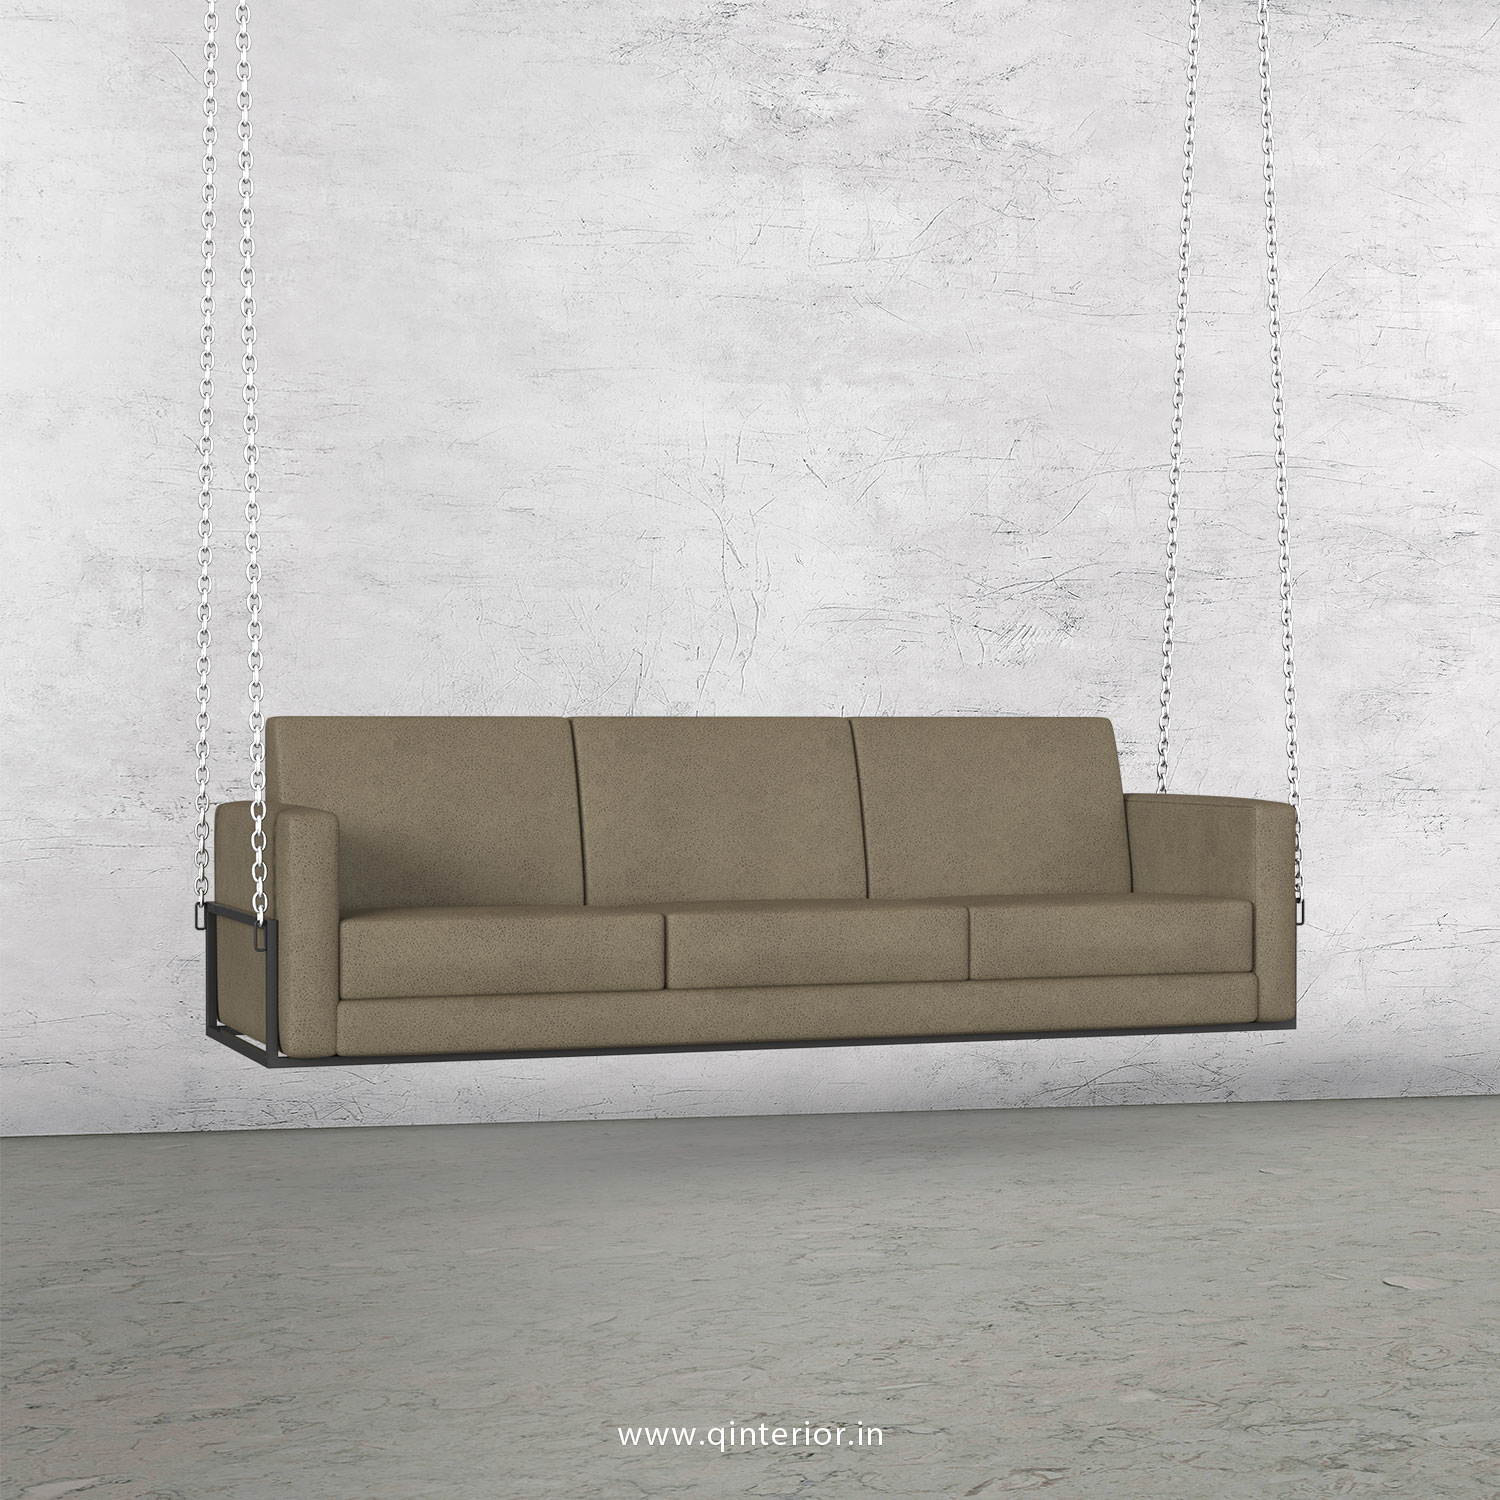 NIRVANA 3 Seater Swing Sofa in Fab Leather Fabric - SSF001 FL03